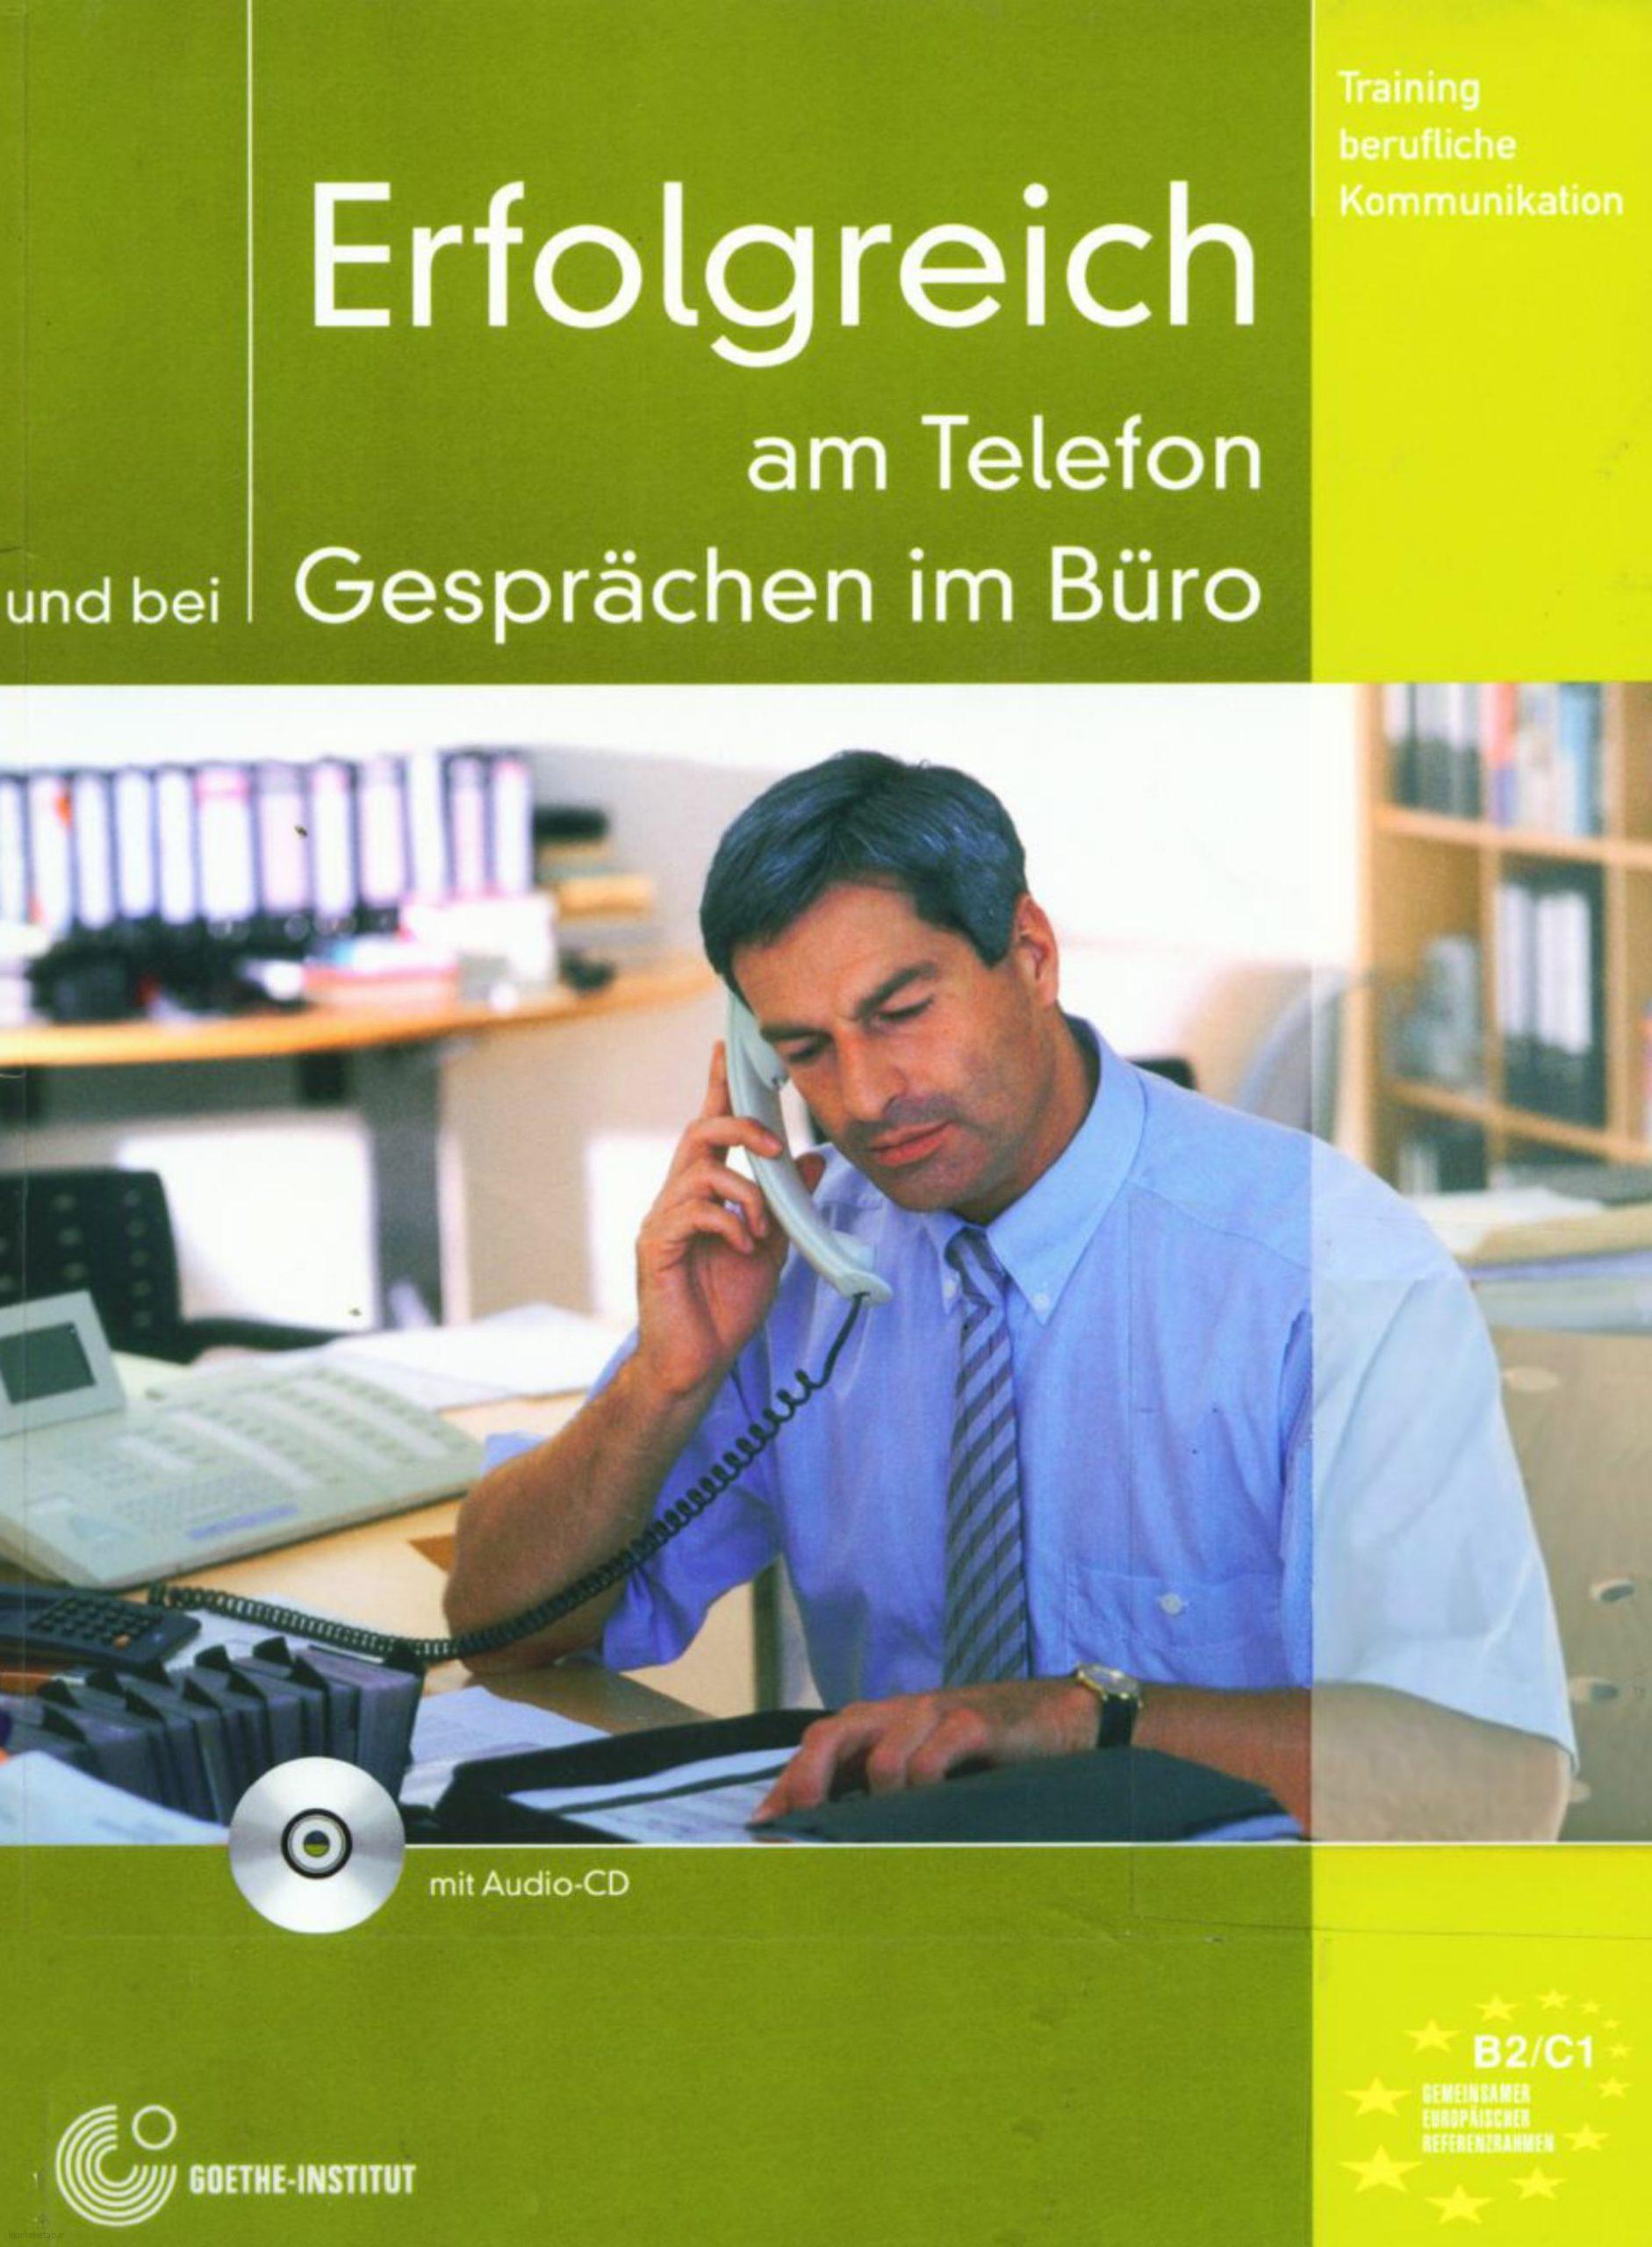 دانلود کتاب آلمانی Erfolgreich am telefon und bei gesprachen im buro